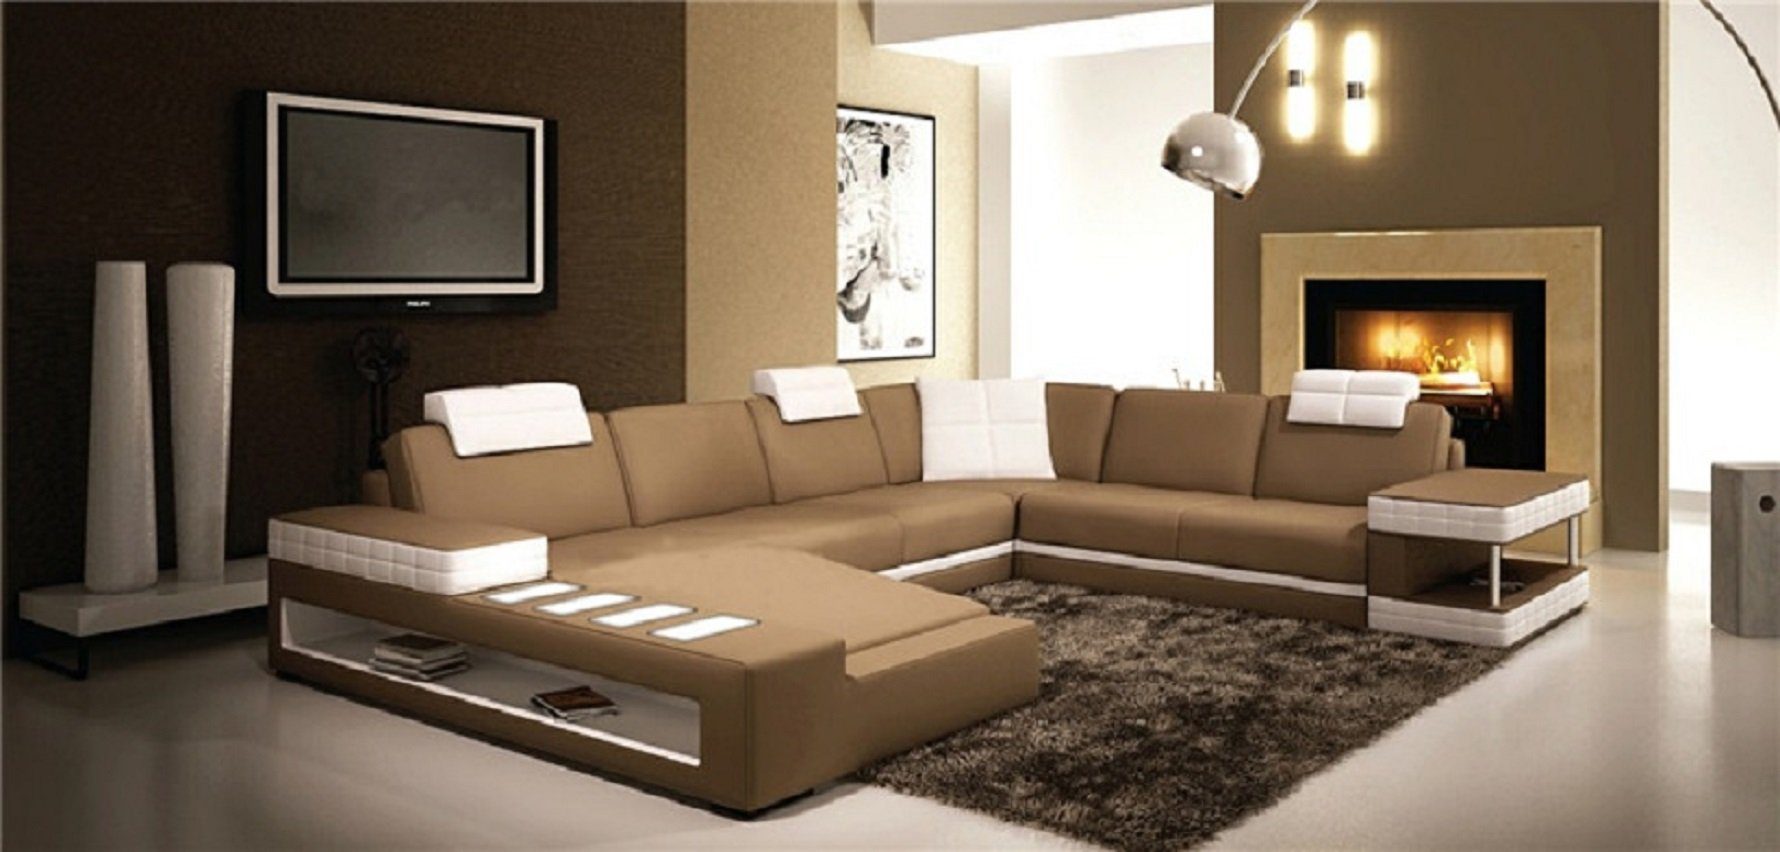 JVmoebel Ecksofa U Form Sofa Couch Polster Wohnlandschaft Design Luxus Ecksofa Leder Braun/Weiß